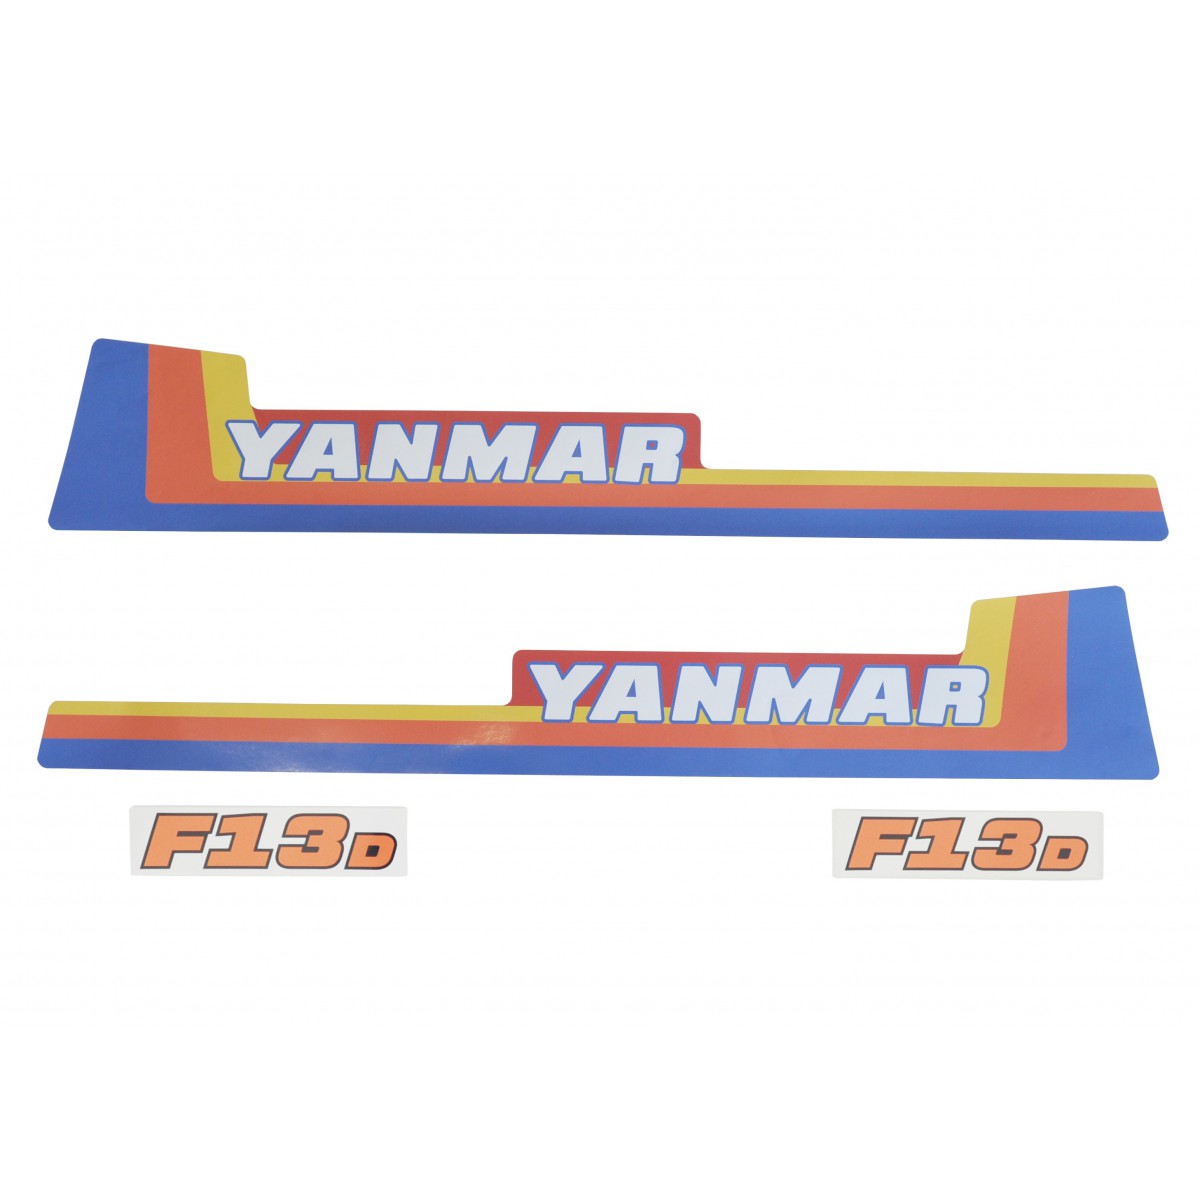 Calcas Yanmar F13D